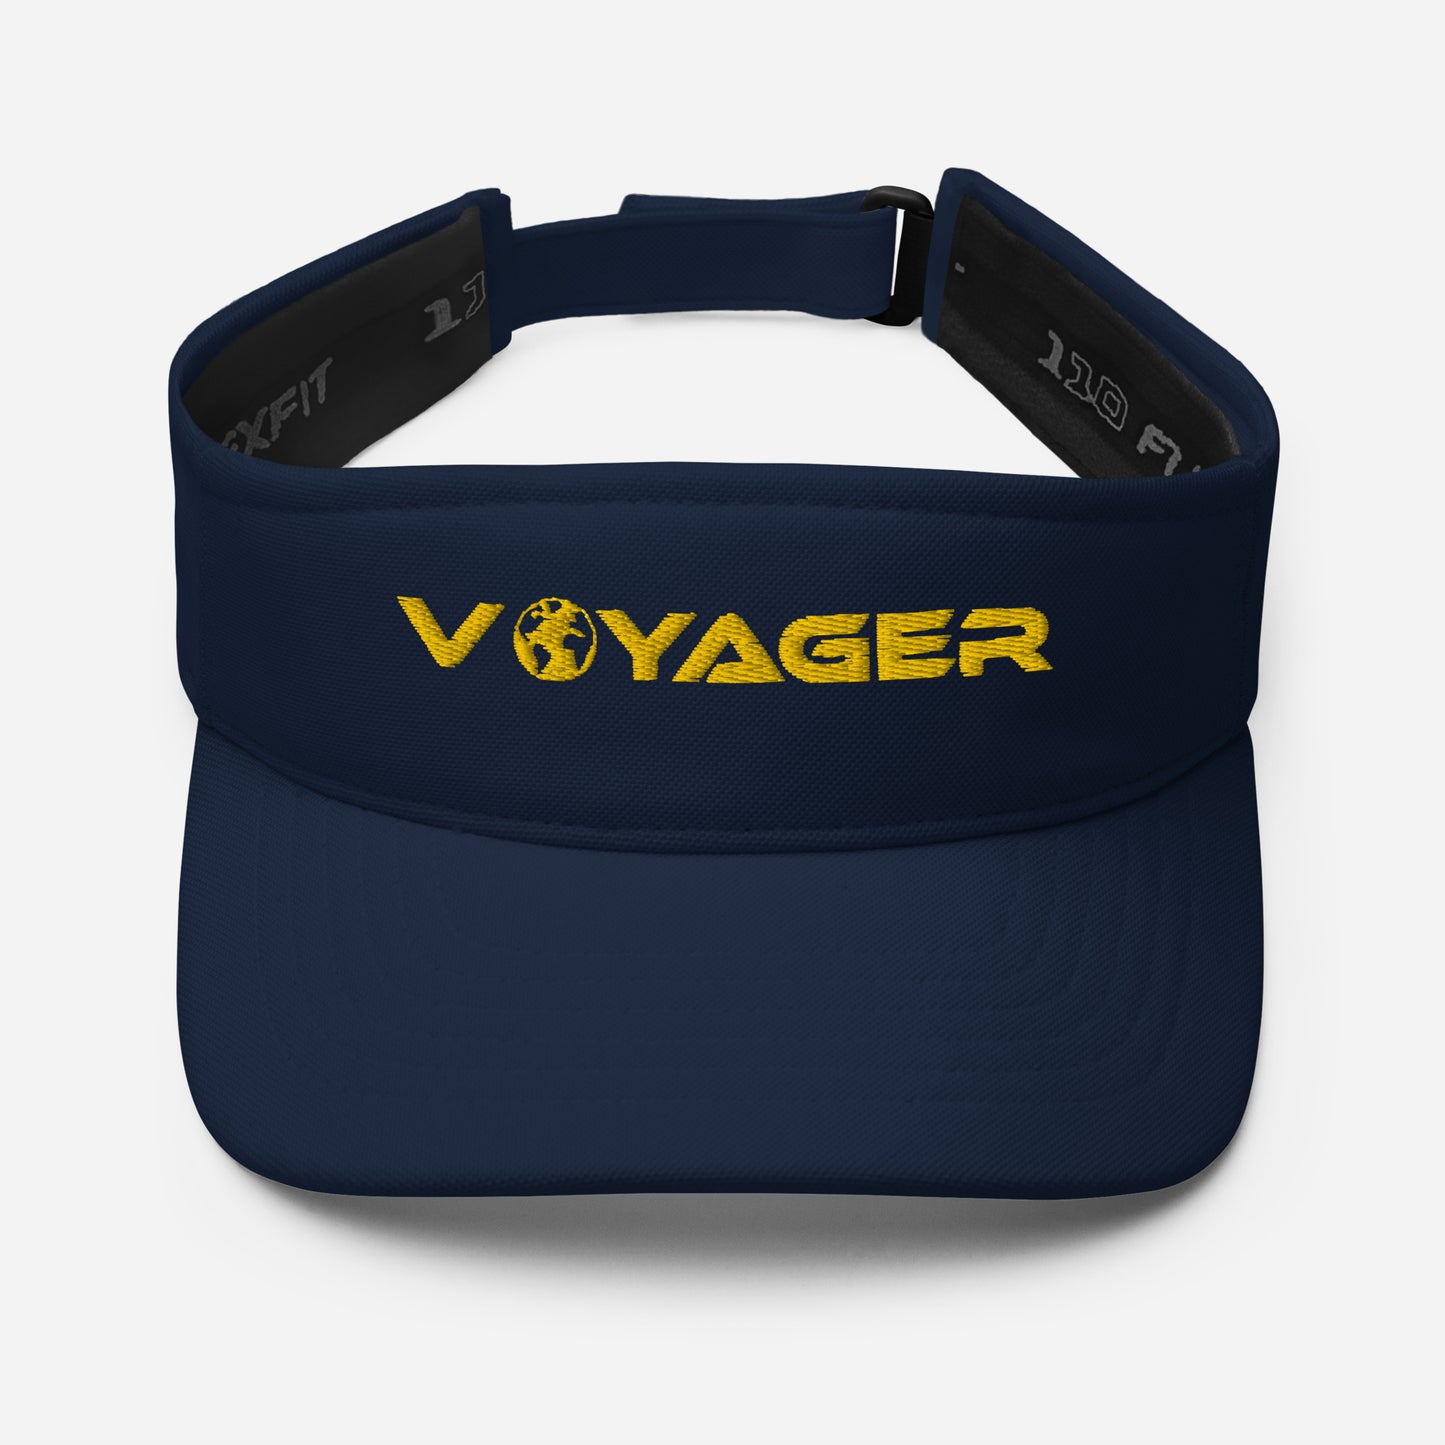 Voyager Visor